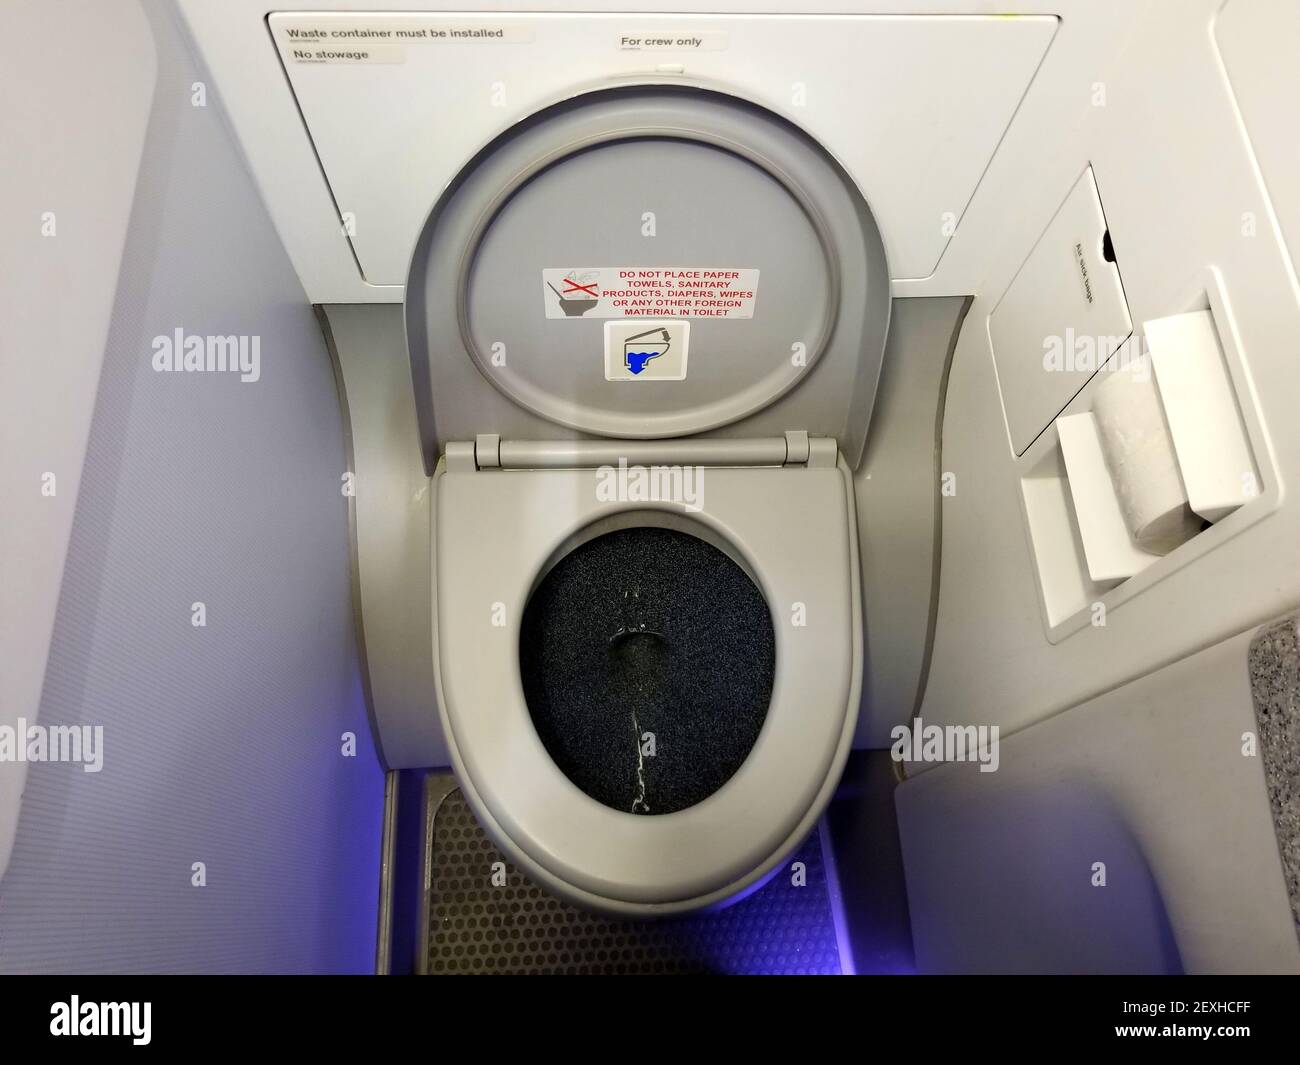 Orlando, Florida, U.S - February 21, 2021 - A toilet inside a plane Stock Photo